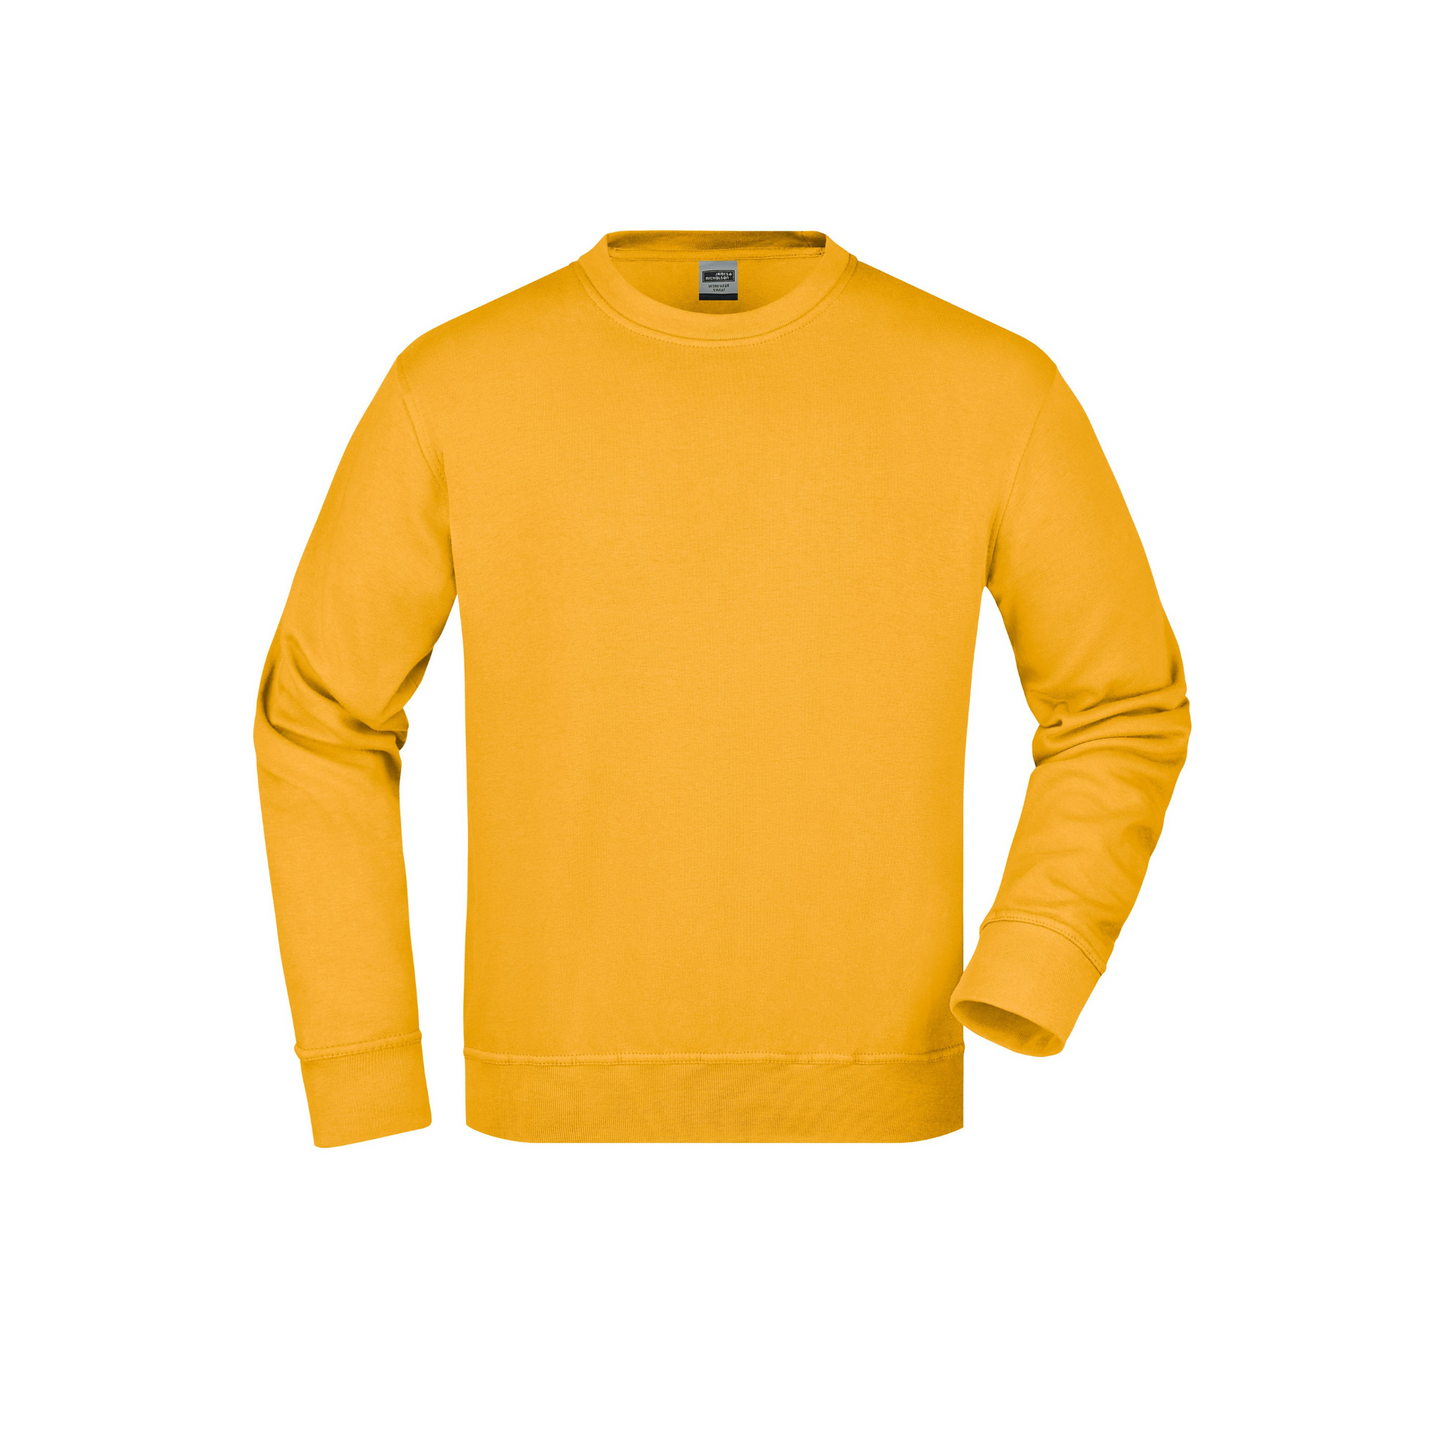 Budget Workwear Sweater (Men/ Unisex) (Muster)